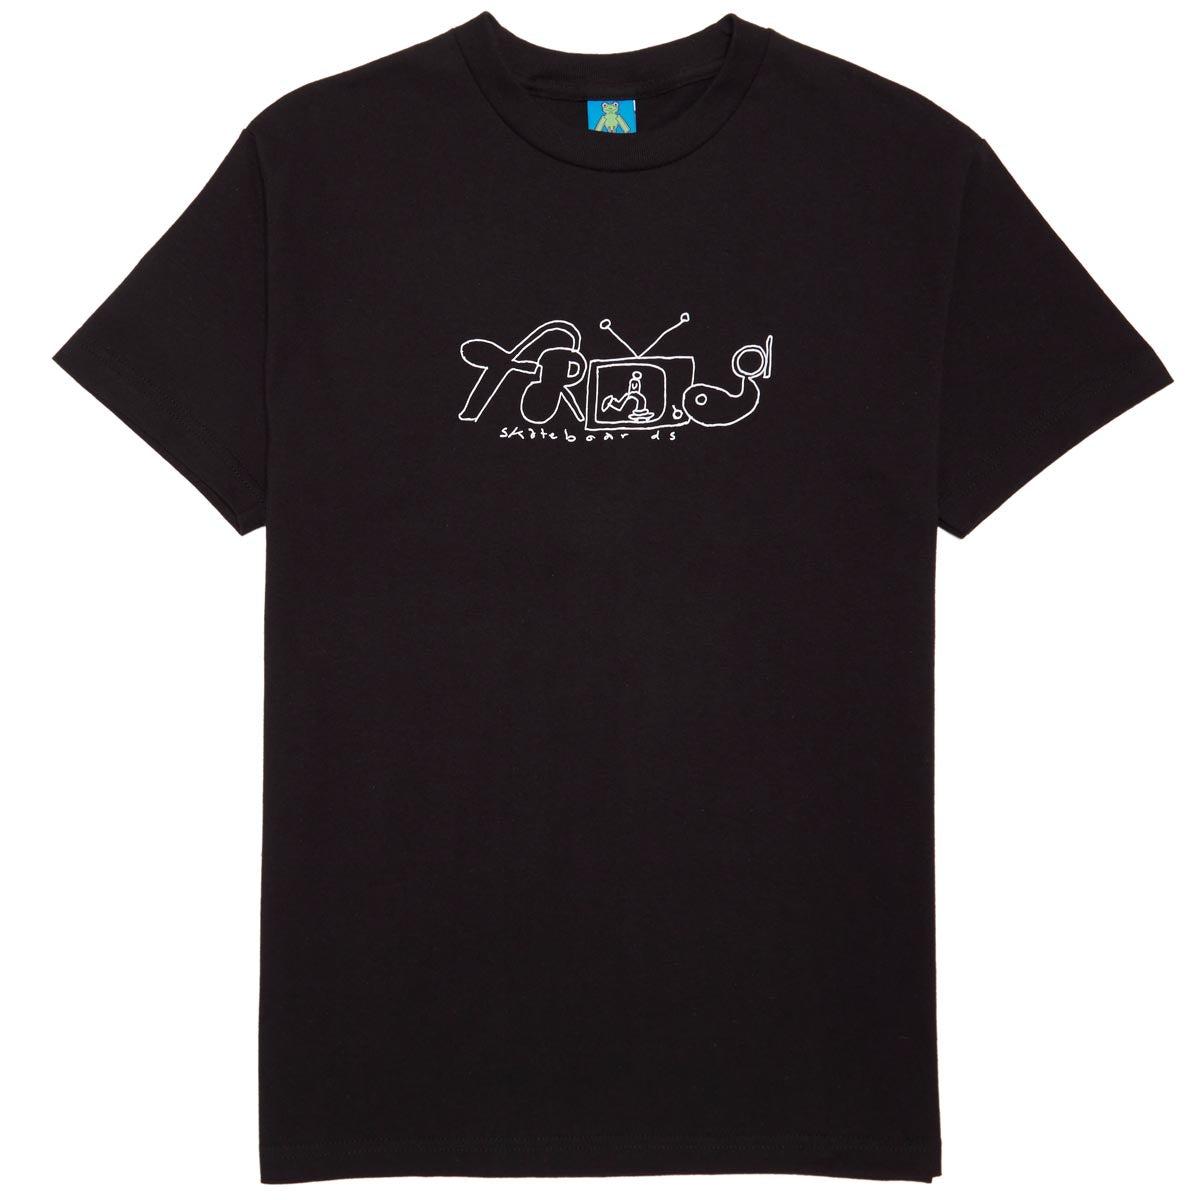 Frog Television T-Shirt - Black image 1